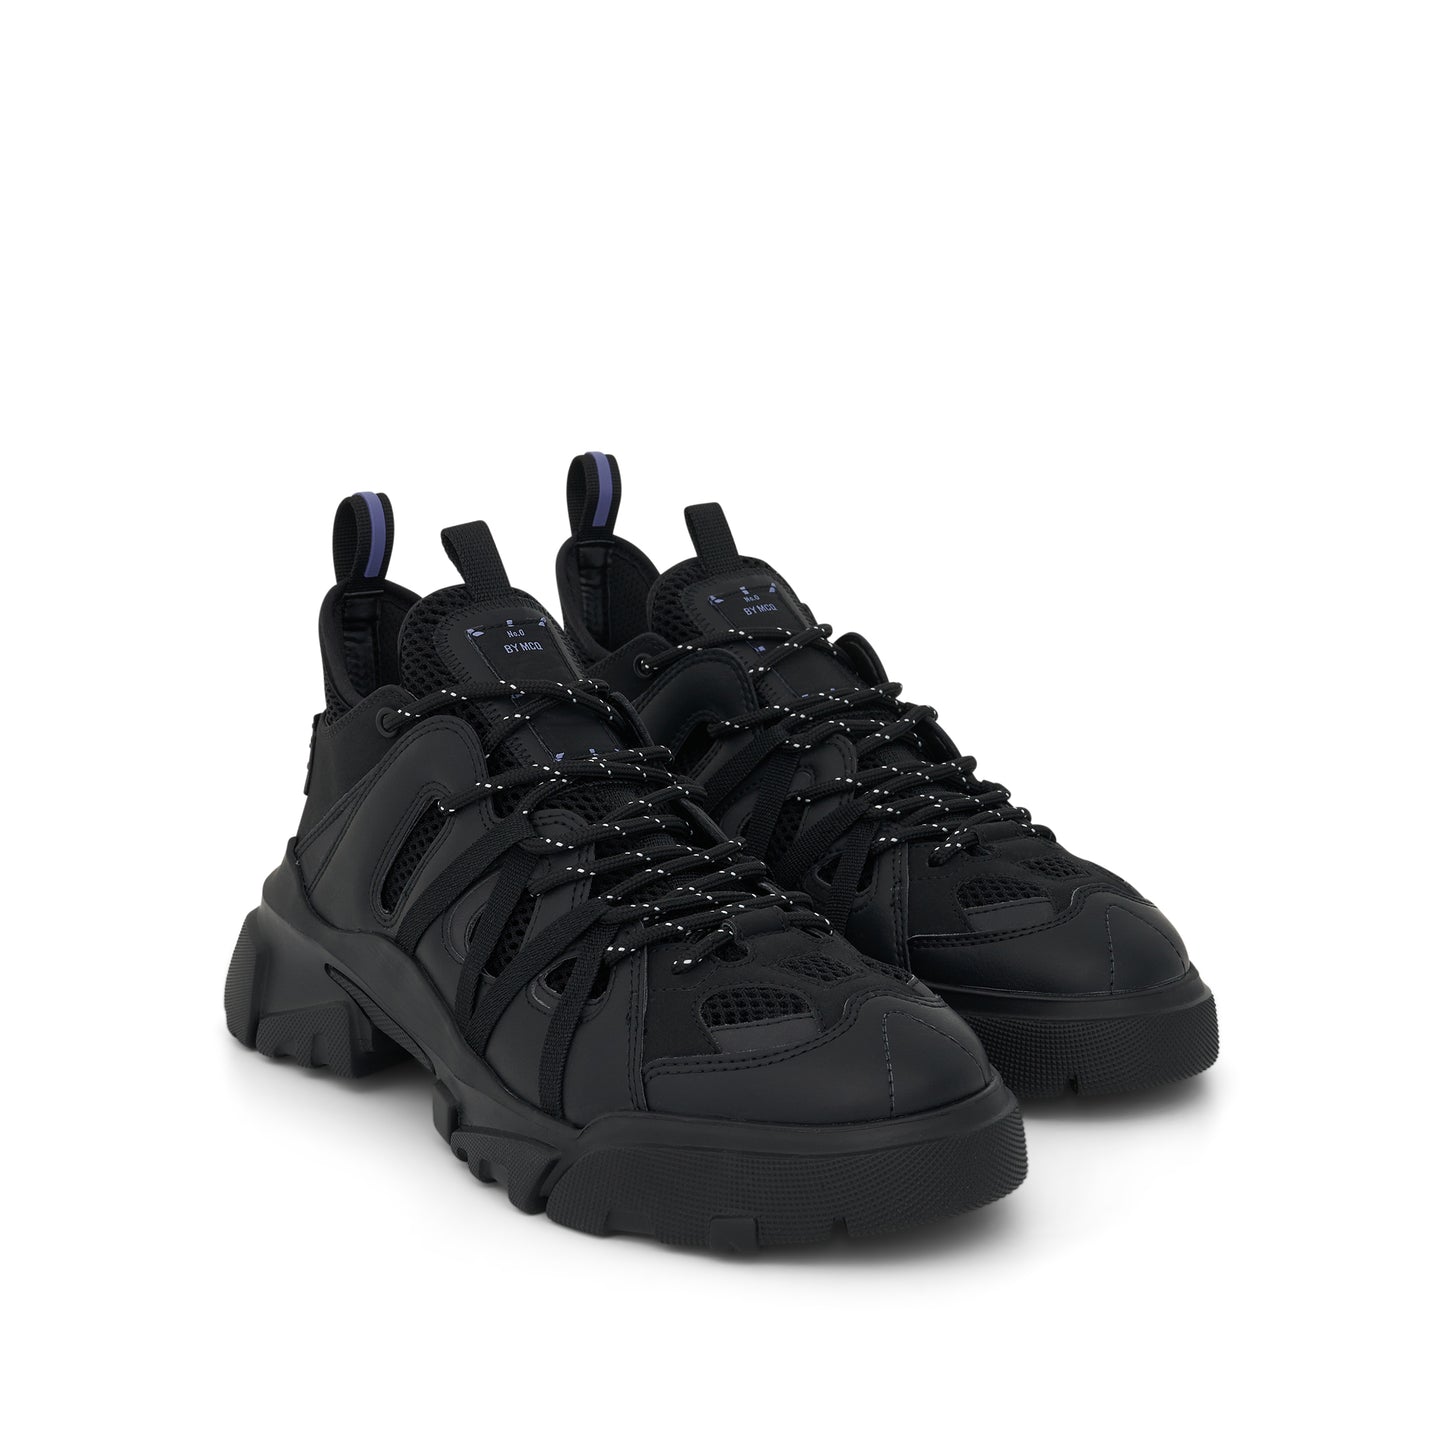 Orbyt 2.0 Sneaker in Black